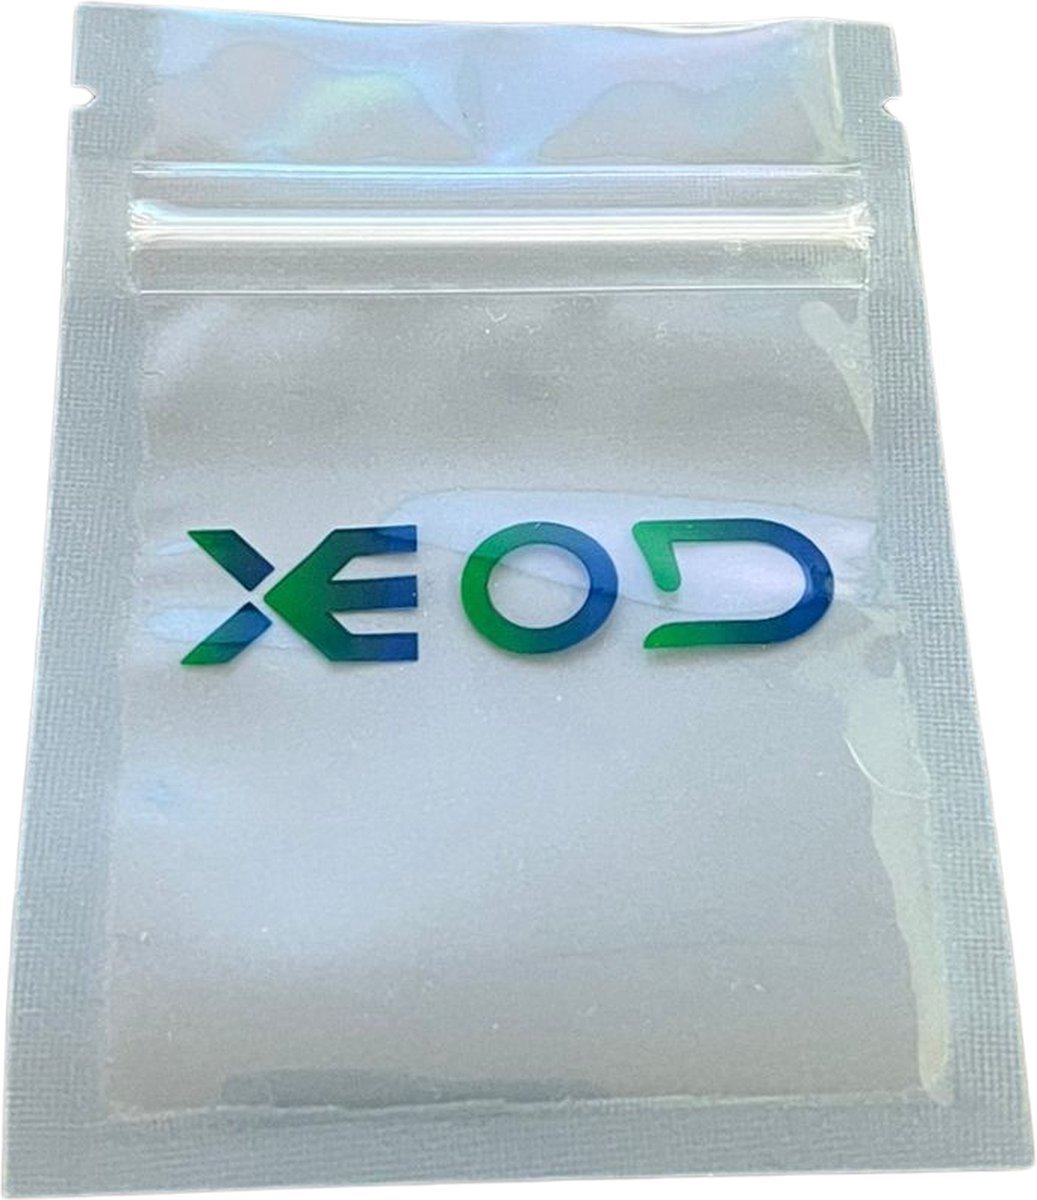 XEOD H4 Perfect Fit Bi-LED lampen met E-Keur – Auto Verlichting Lamp –  Dimlicht